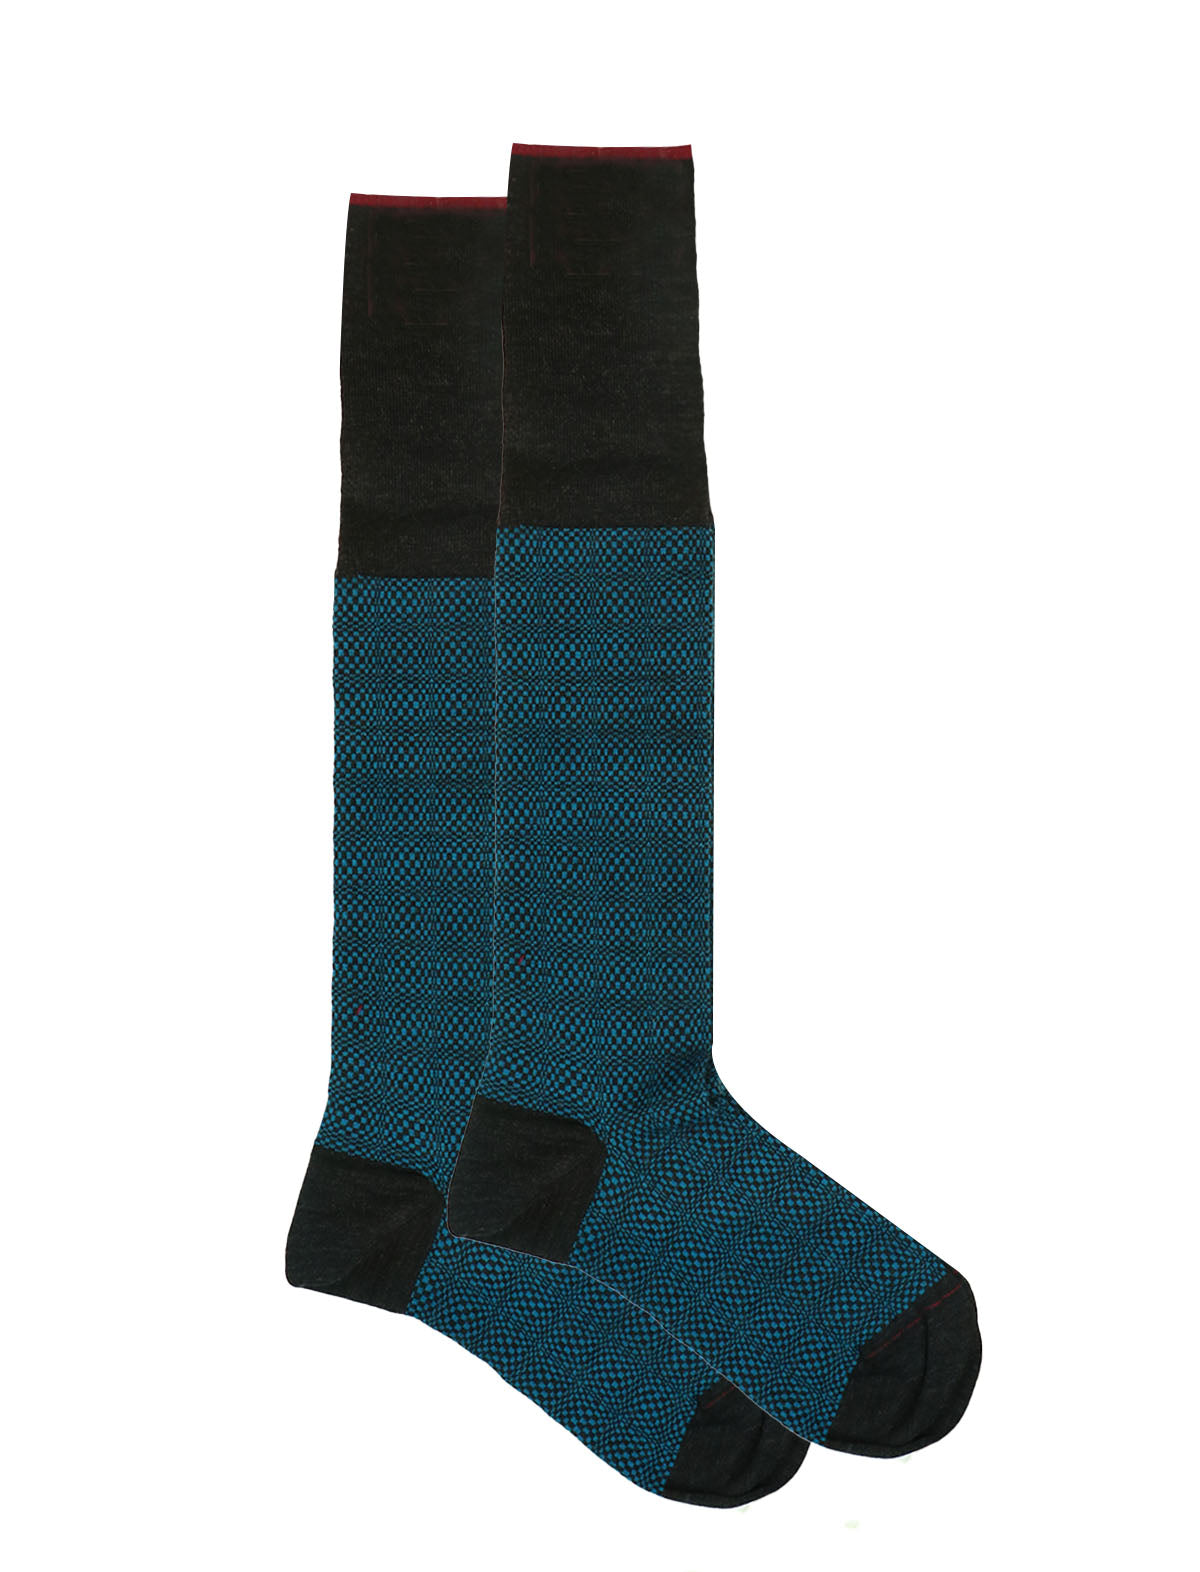 Gallo Long Socks in Black w/ Abstract Blue Print